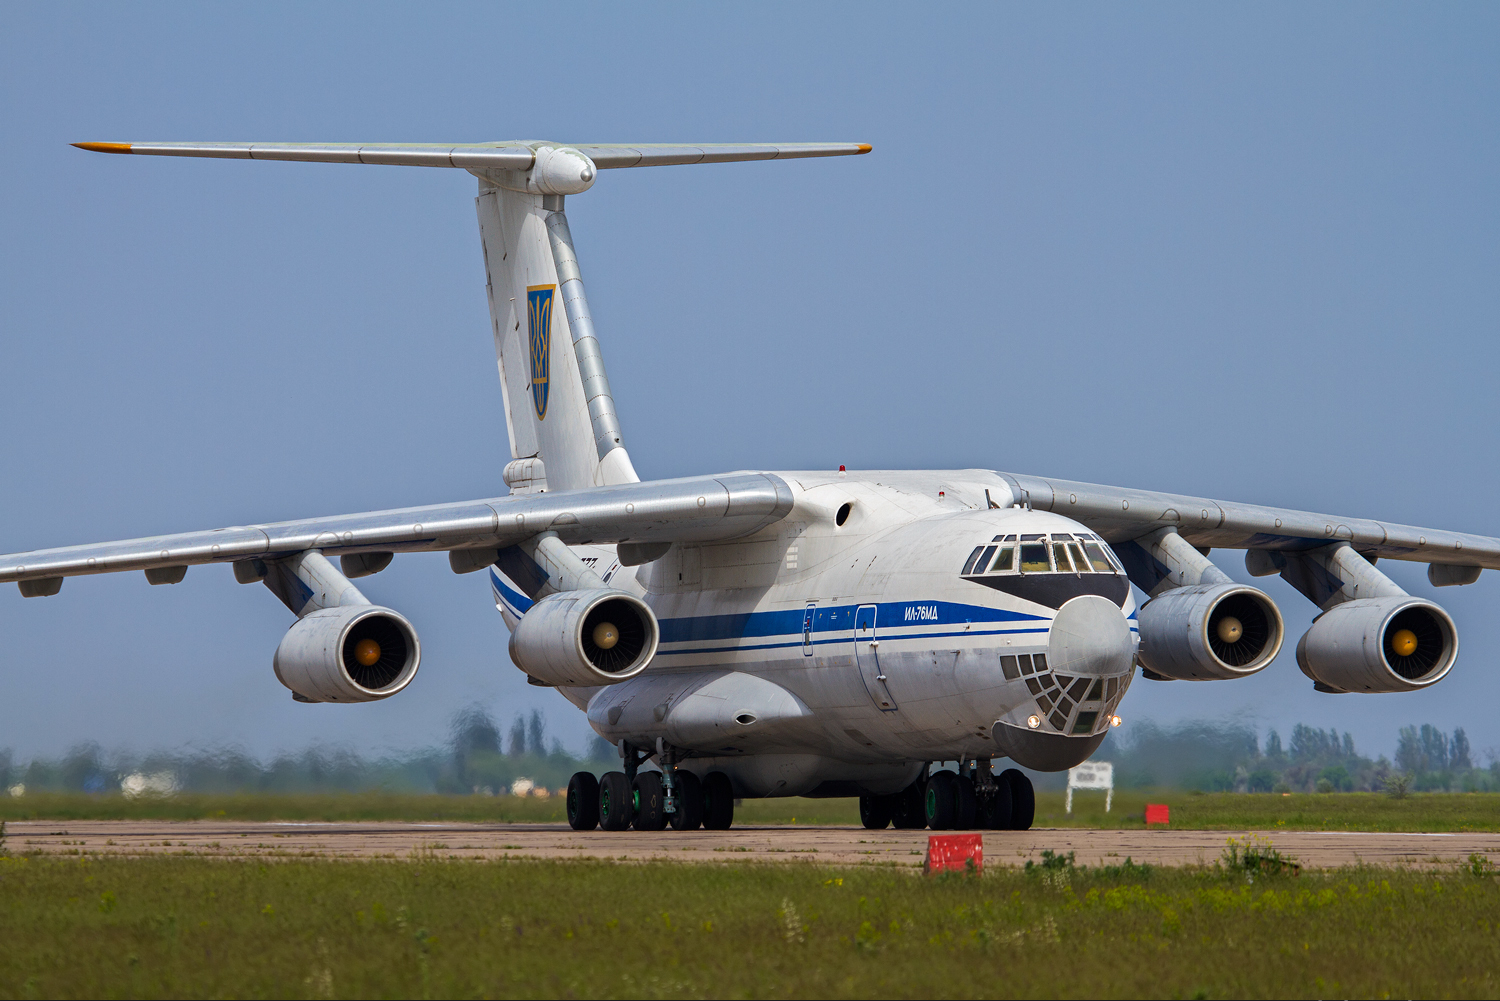 2014 Ukrainian Air Force Il-76 shootdown - Wikipedia